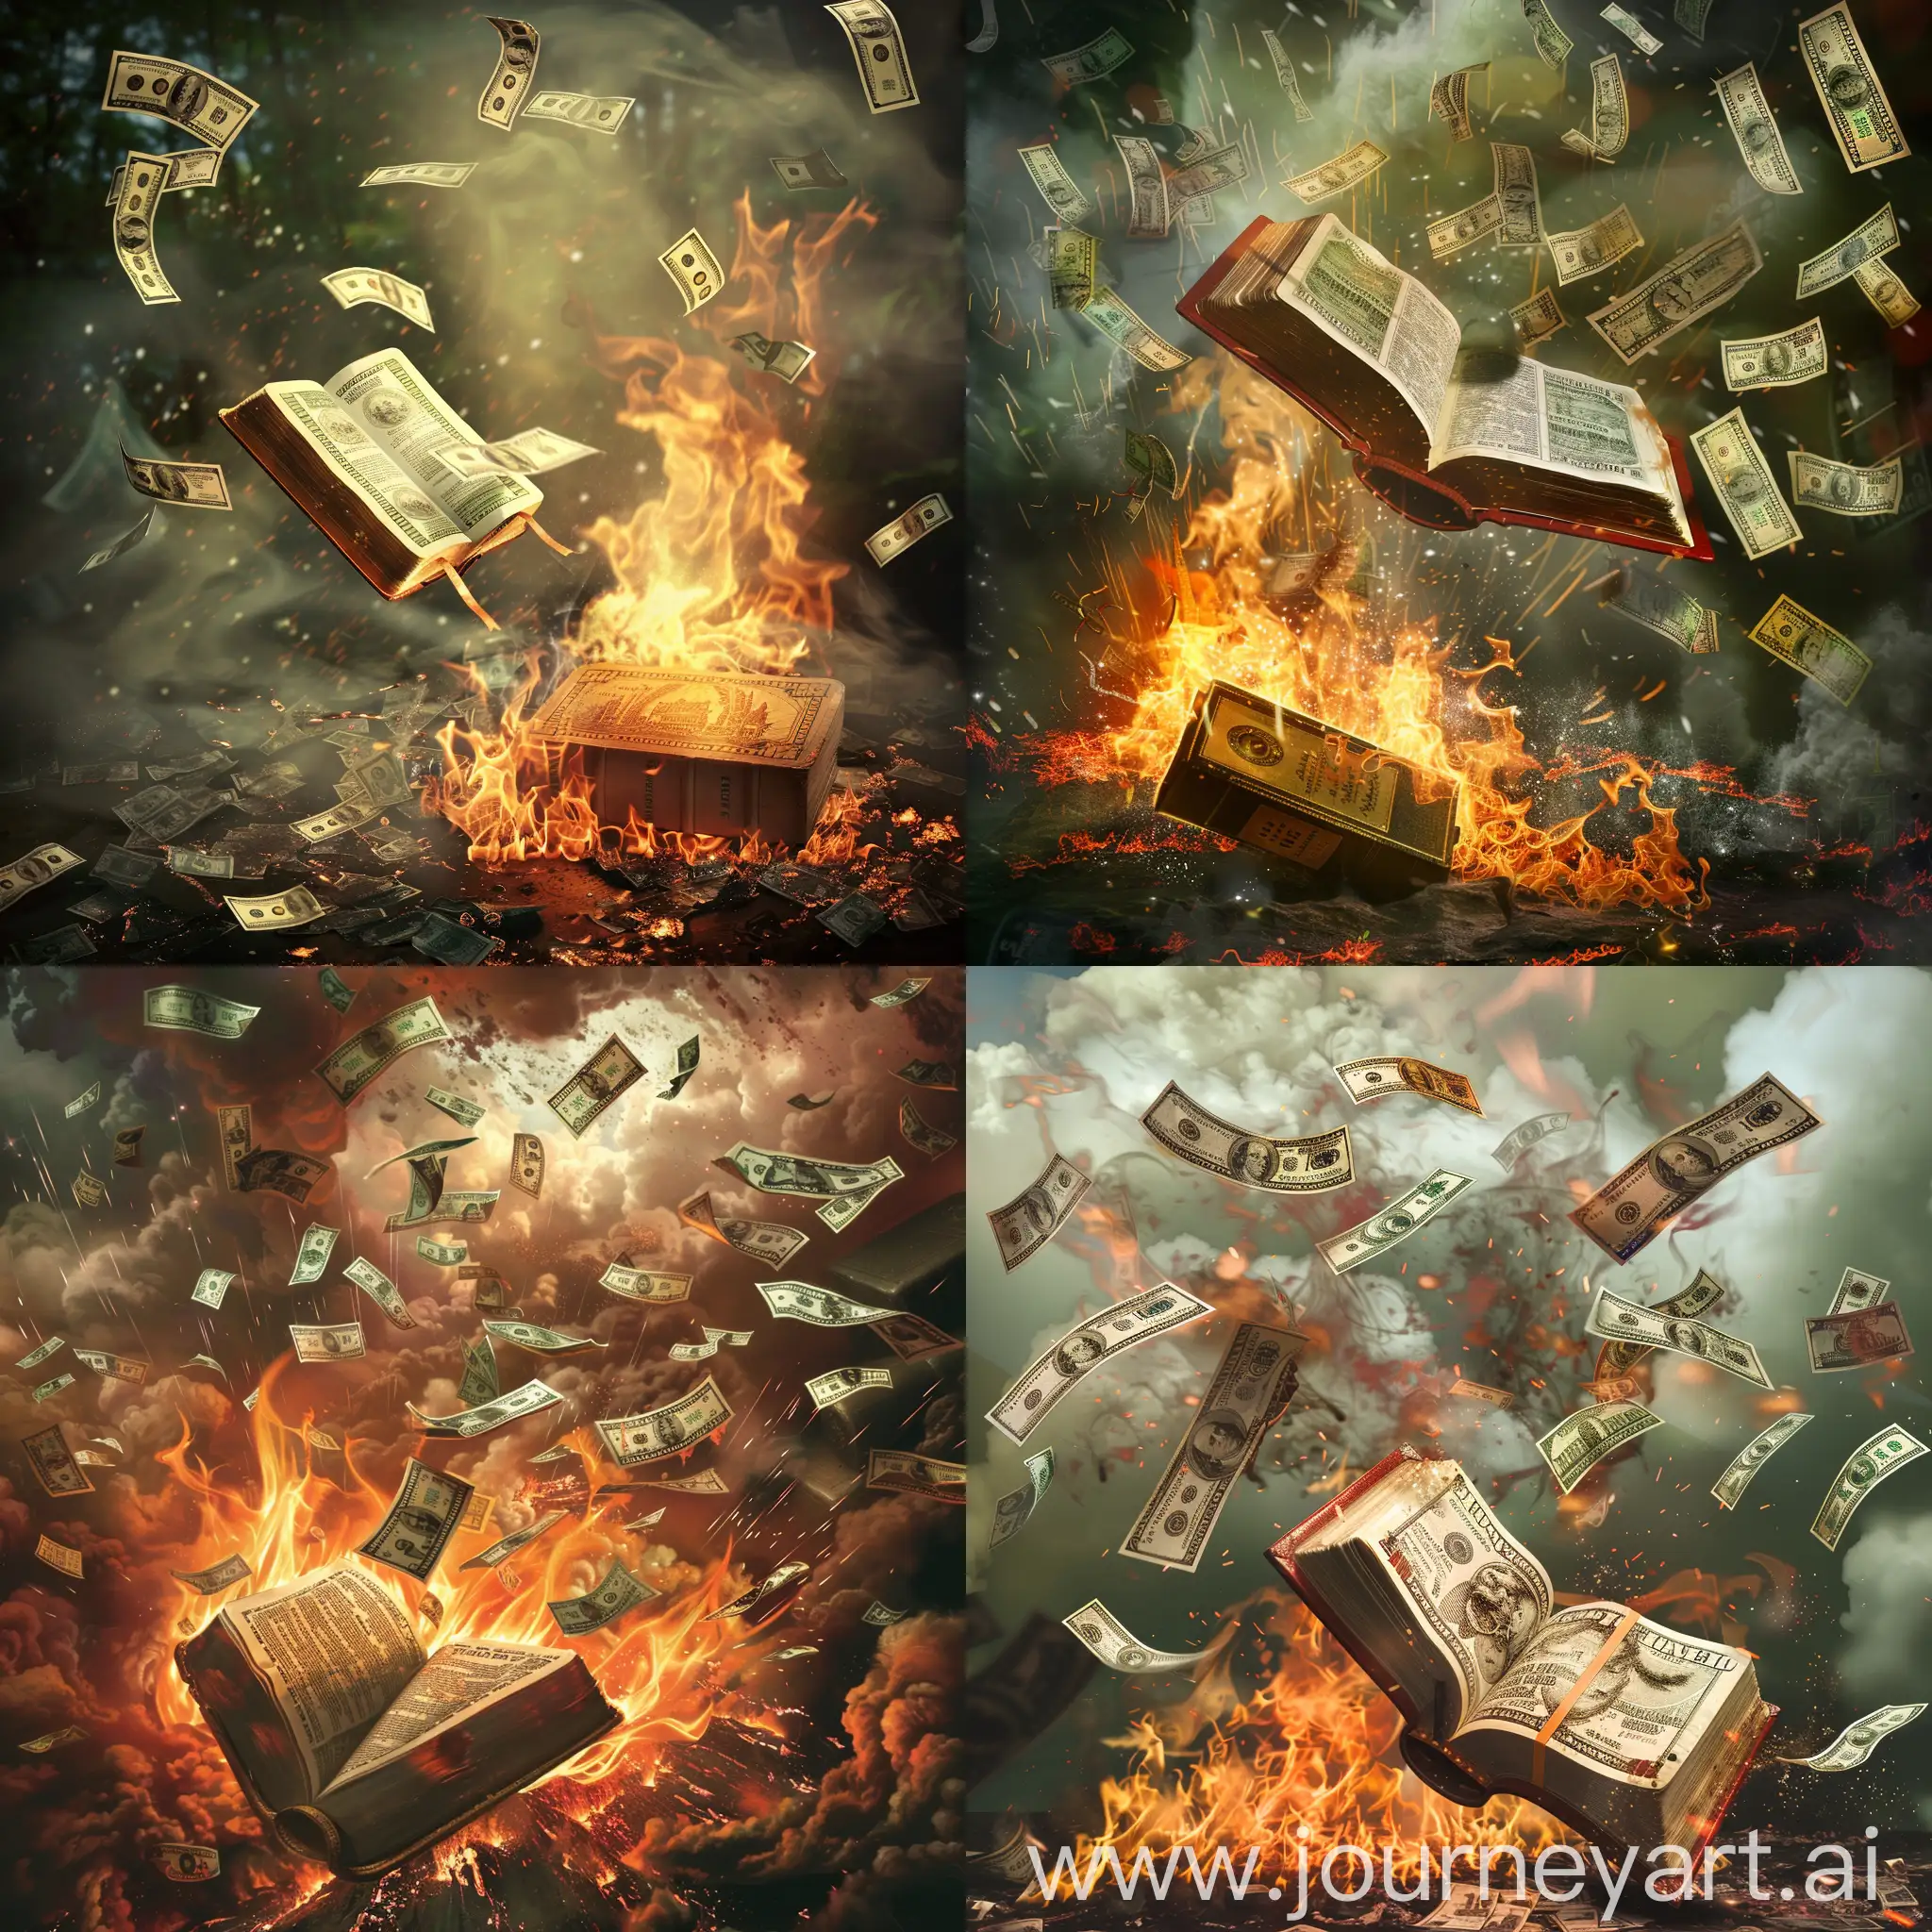 Apocalyptic-Scene-Burning-Bible-and-Money-Shower